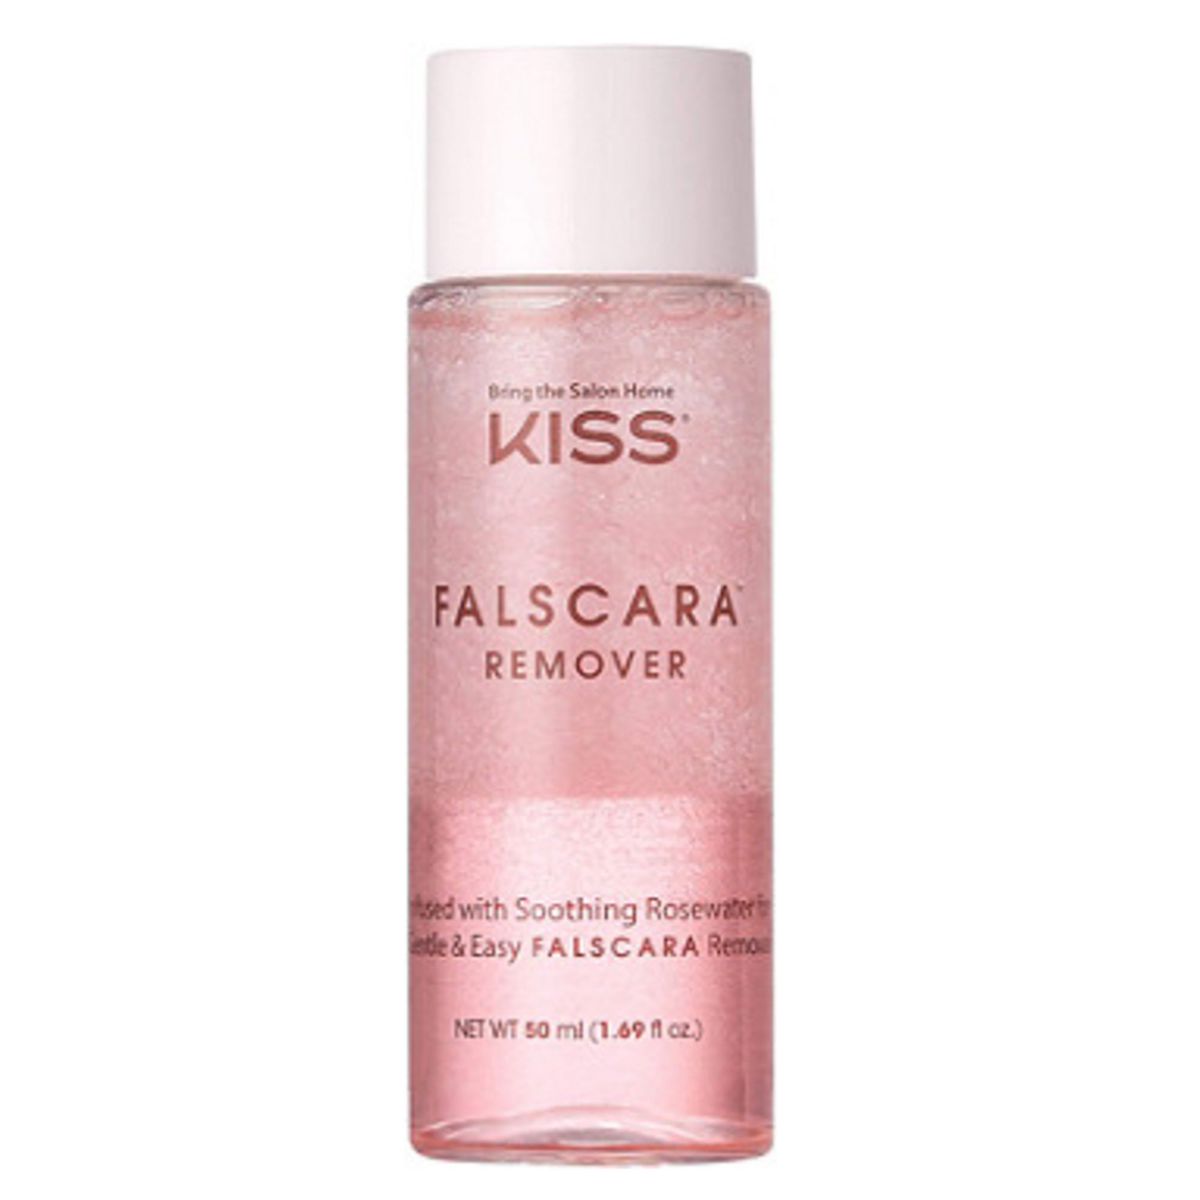 kiss-falscara-remover